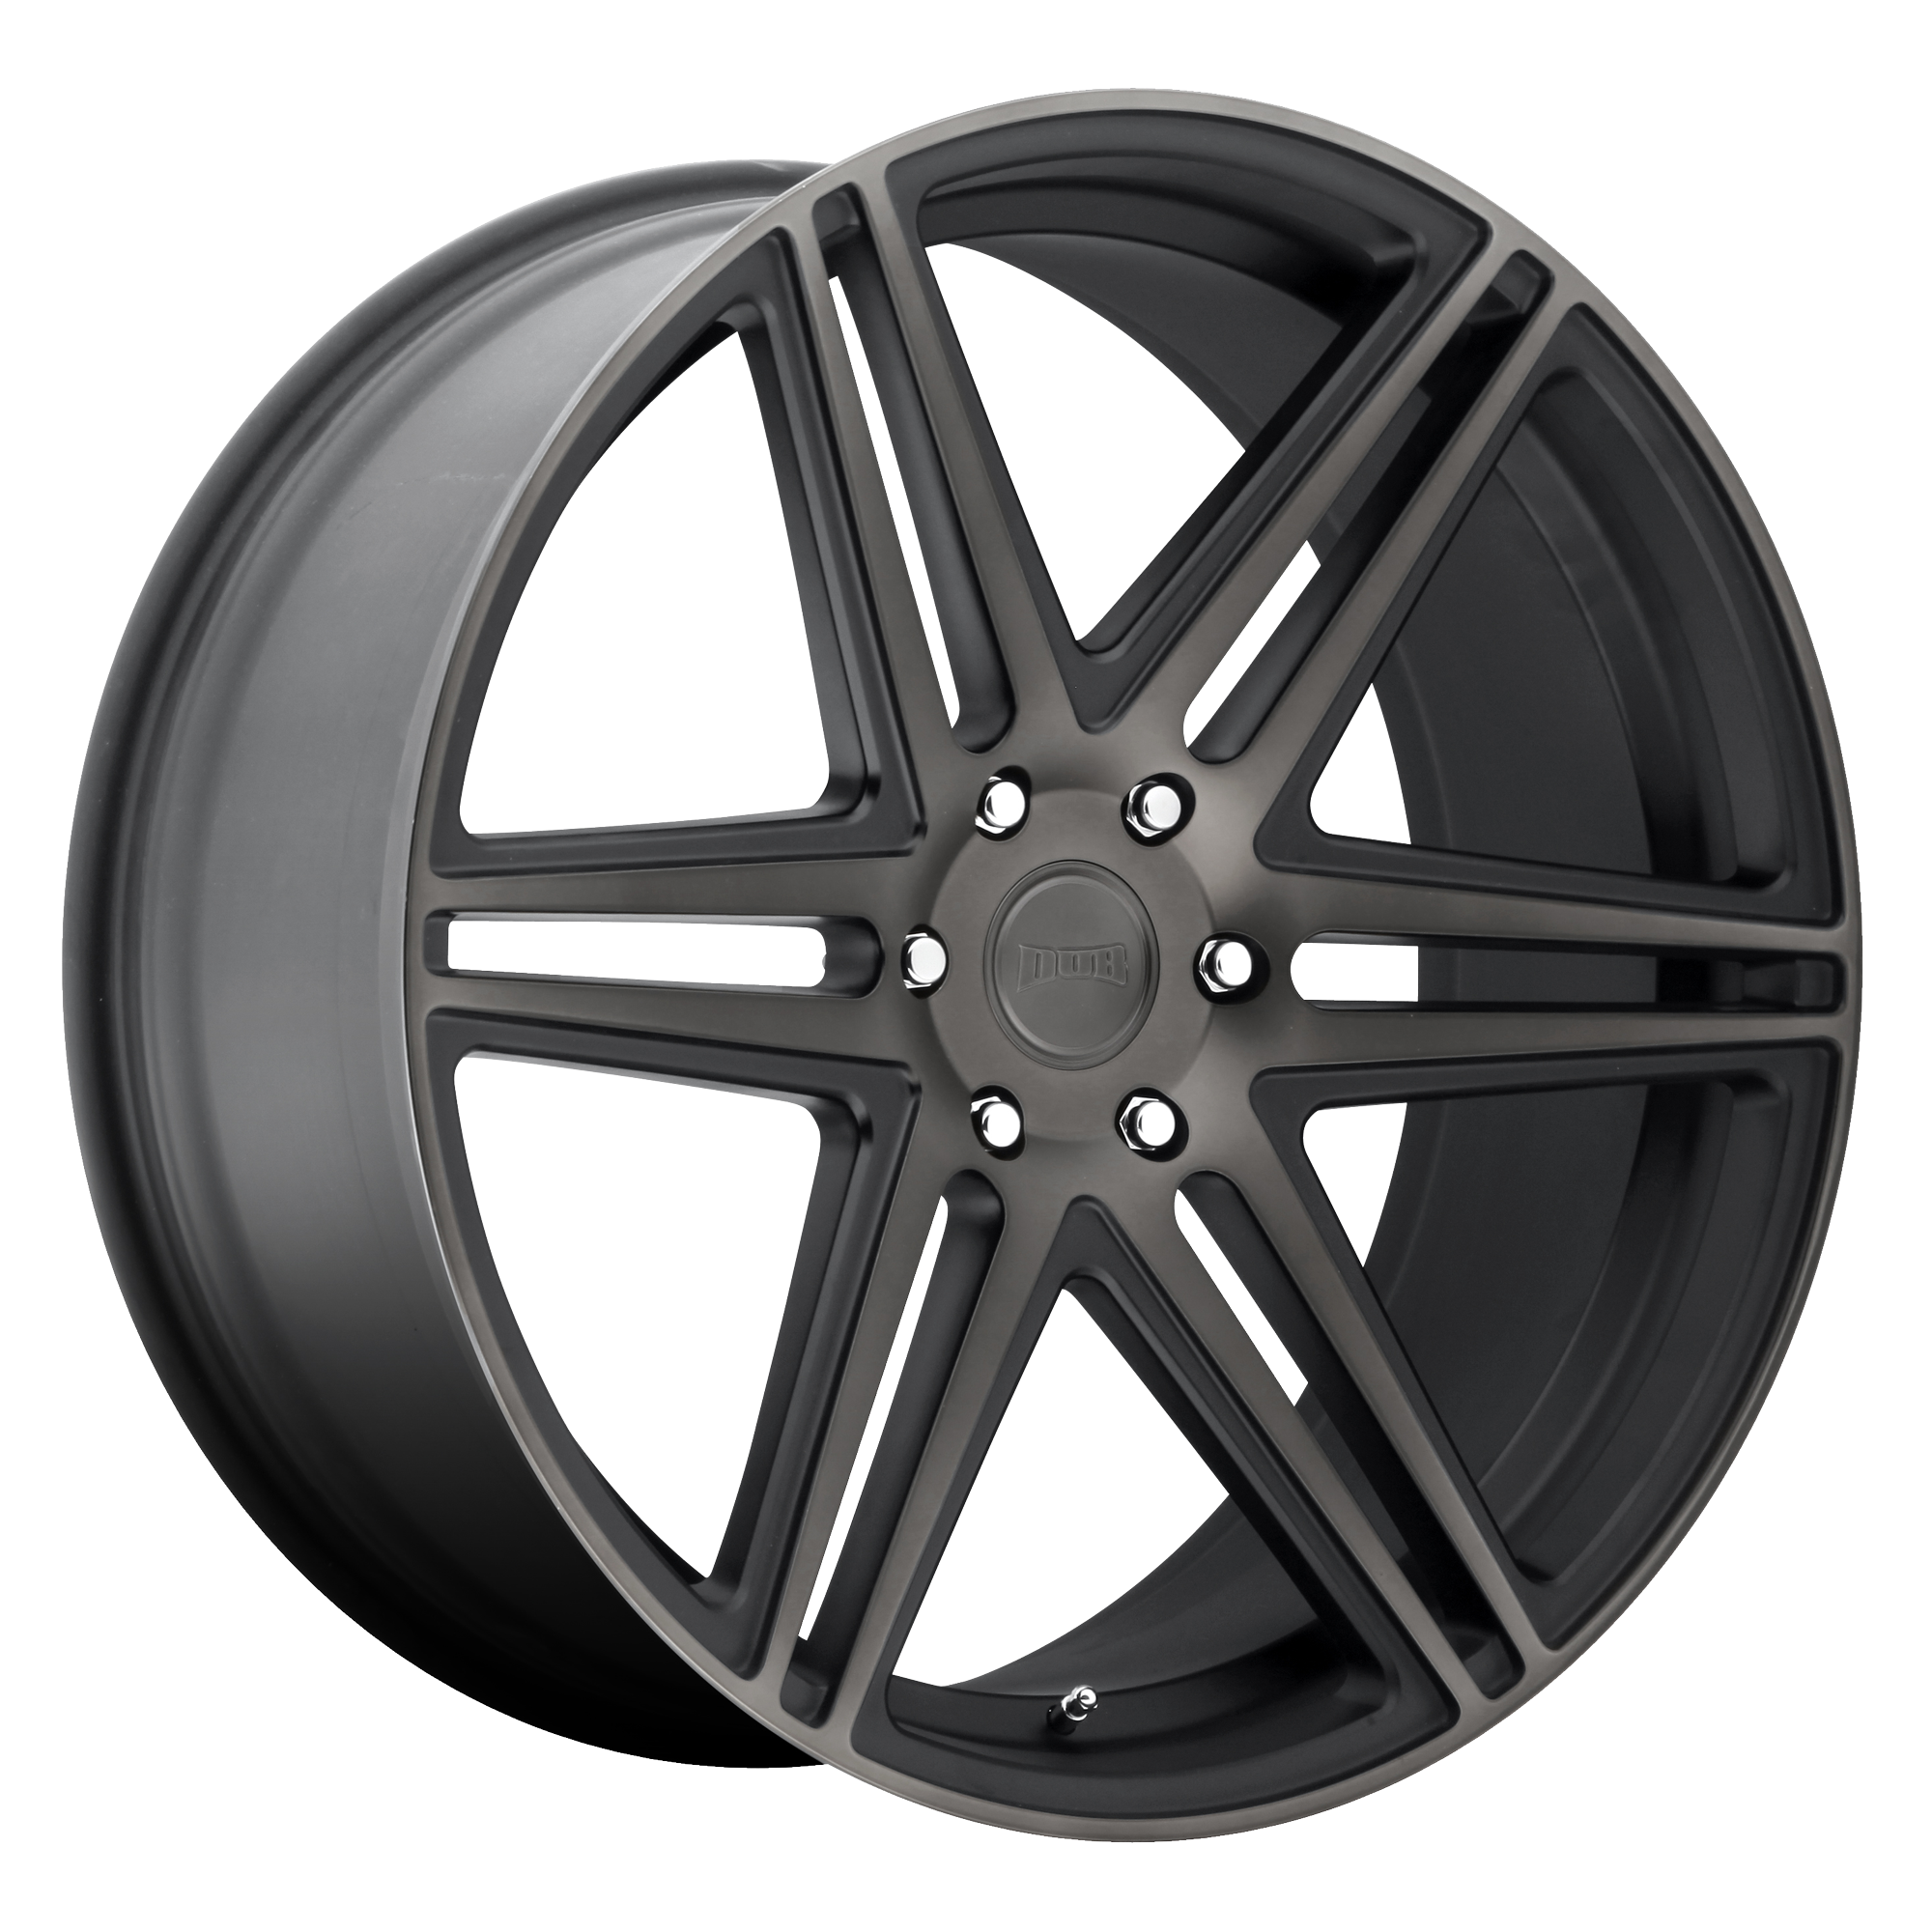 SKILLZ 22x9.5 6x139.70 MATTE BLACK DOUBLE DARK TINT (30 mm) - Tires and Engine Performance